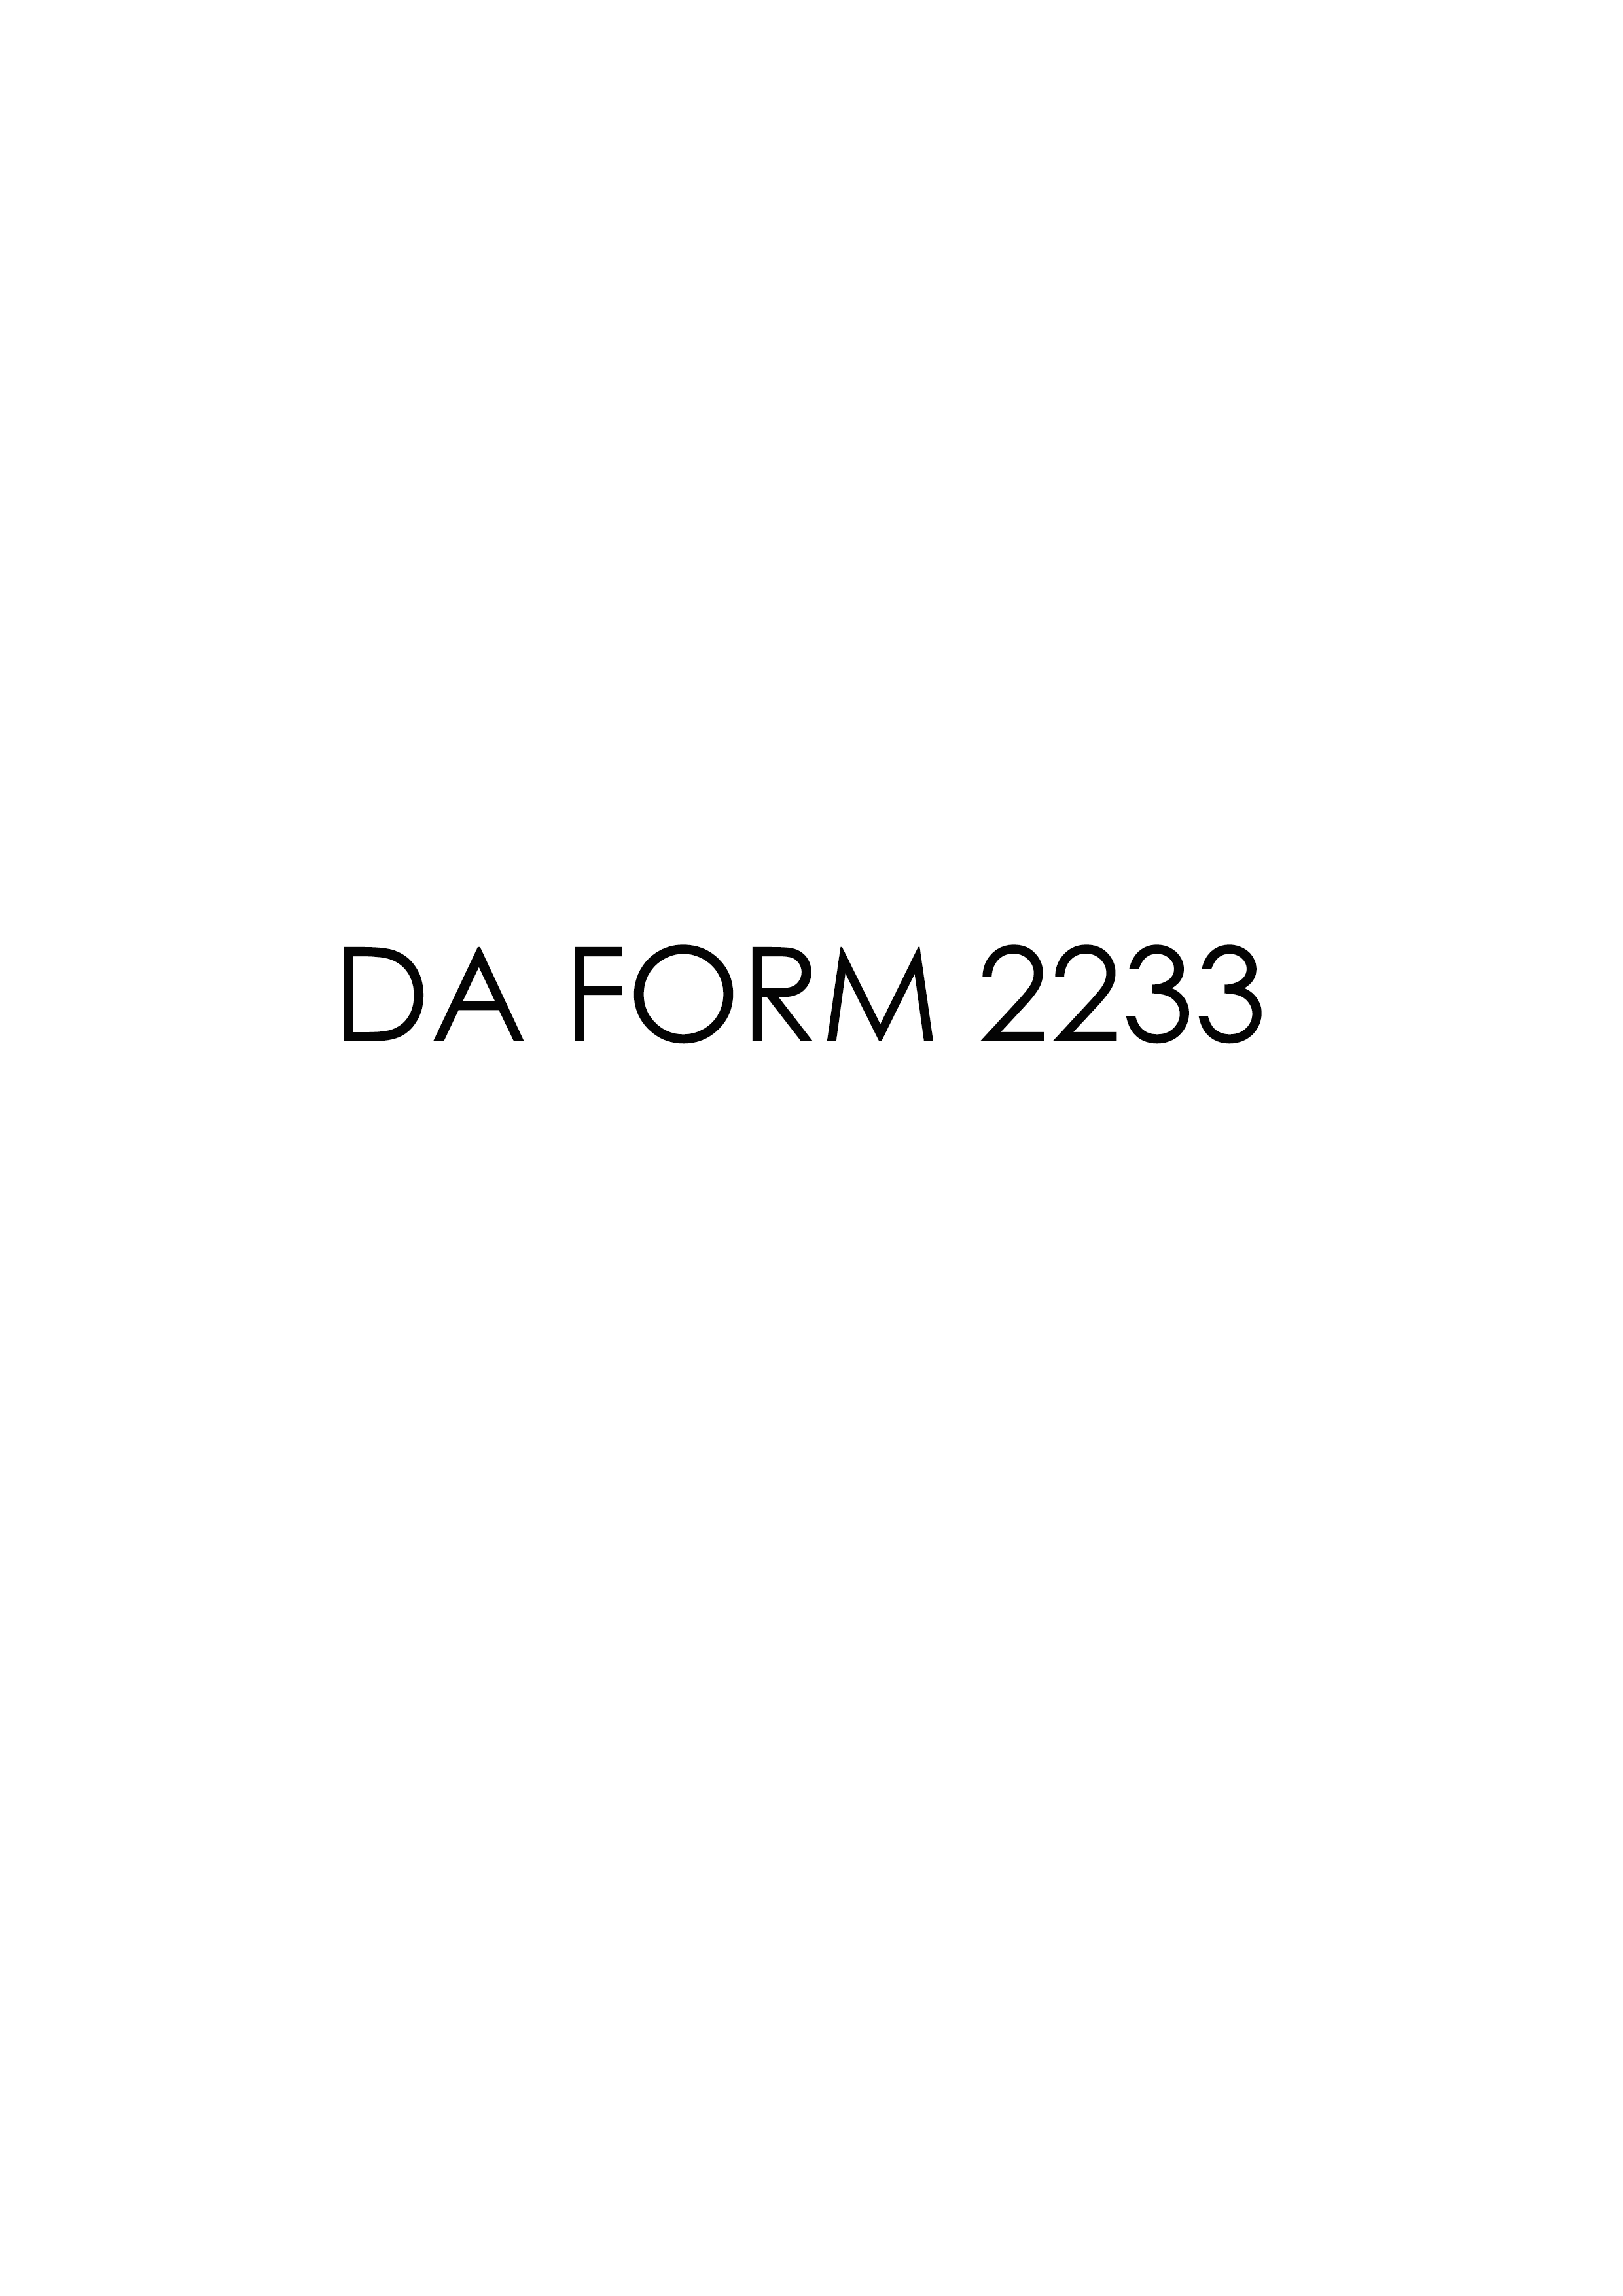 Download da 2233 Form